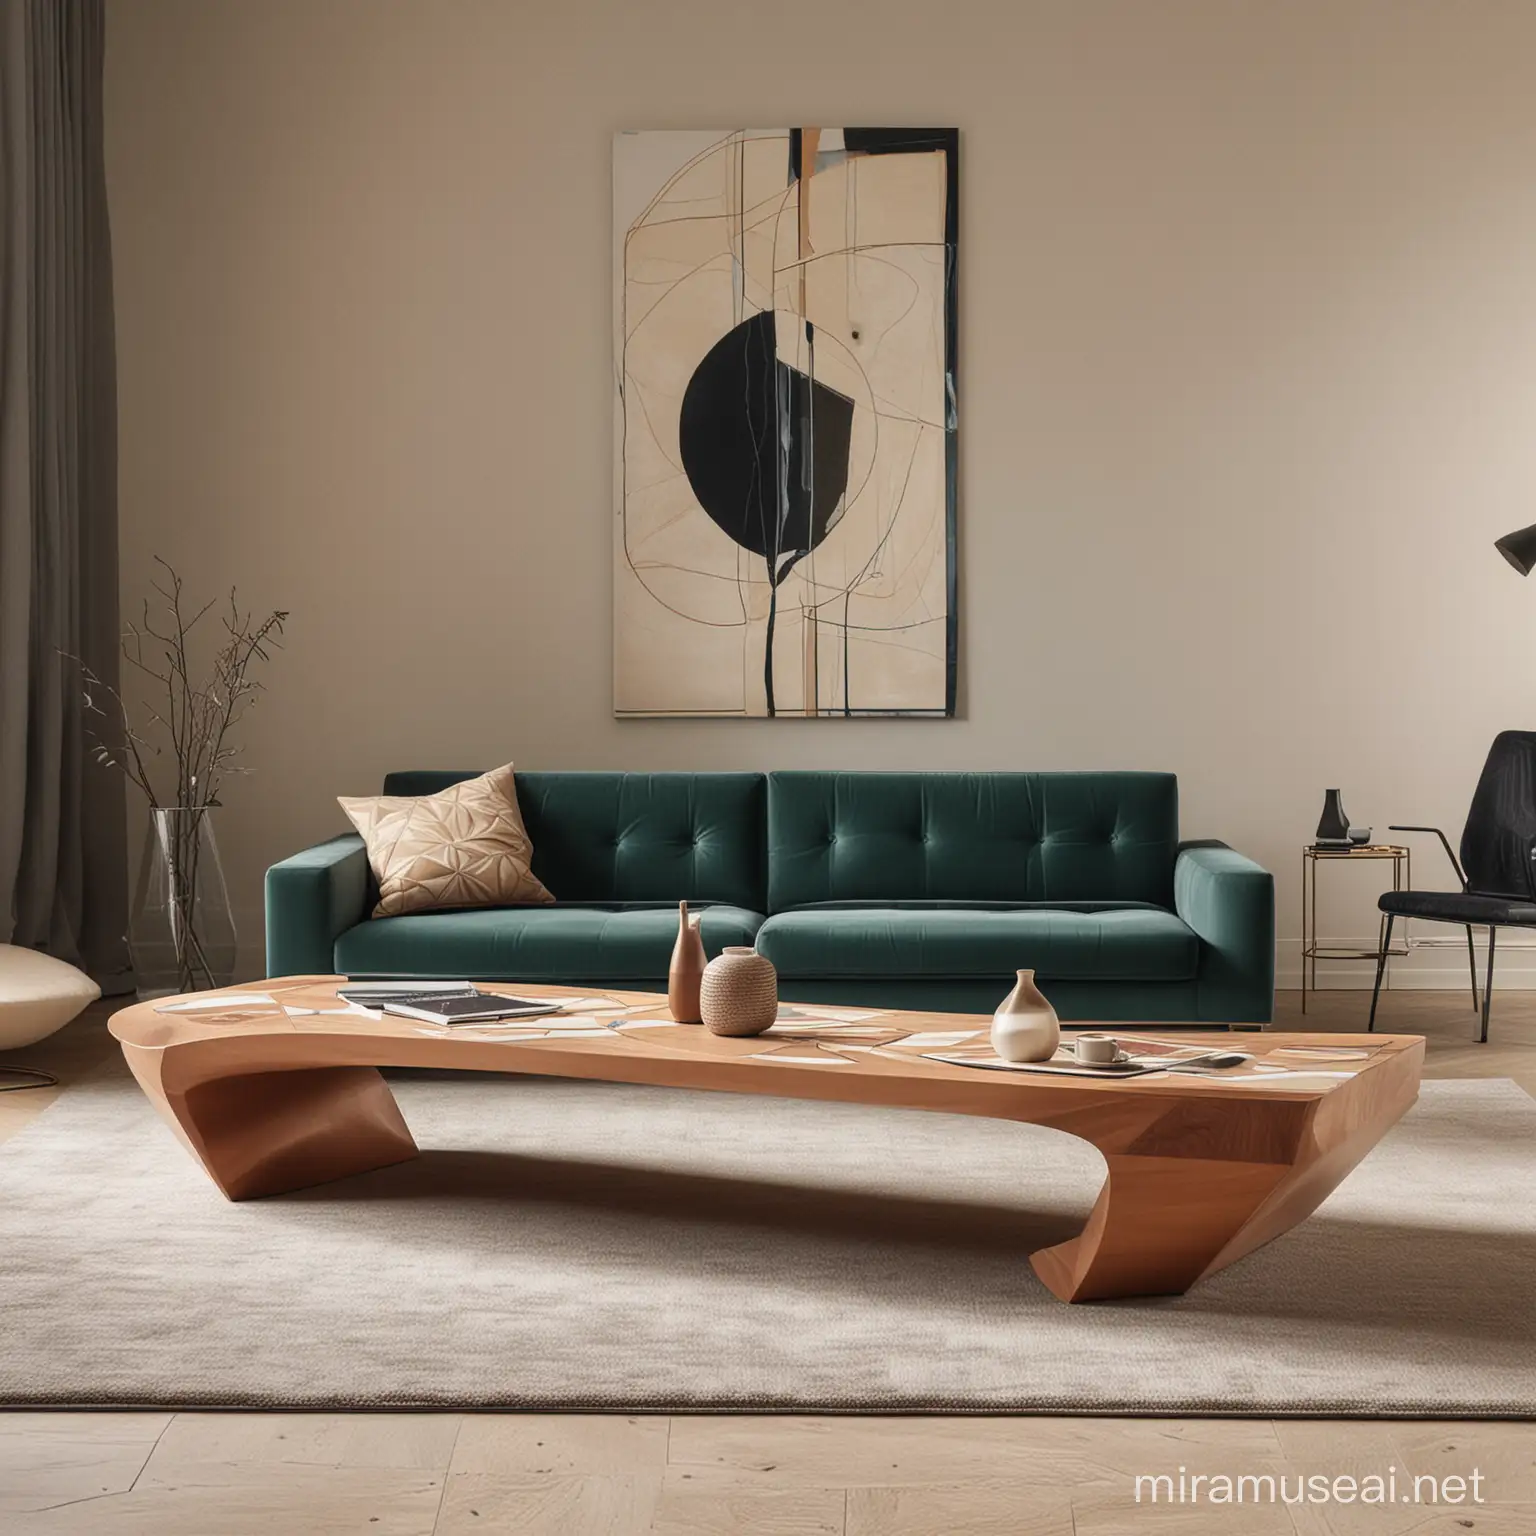 Geometric Interior Design Manifesto of Parisian Style Furniture Collection